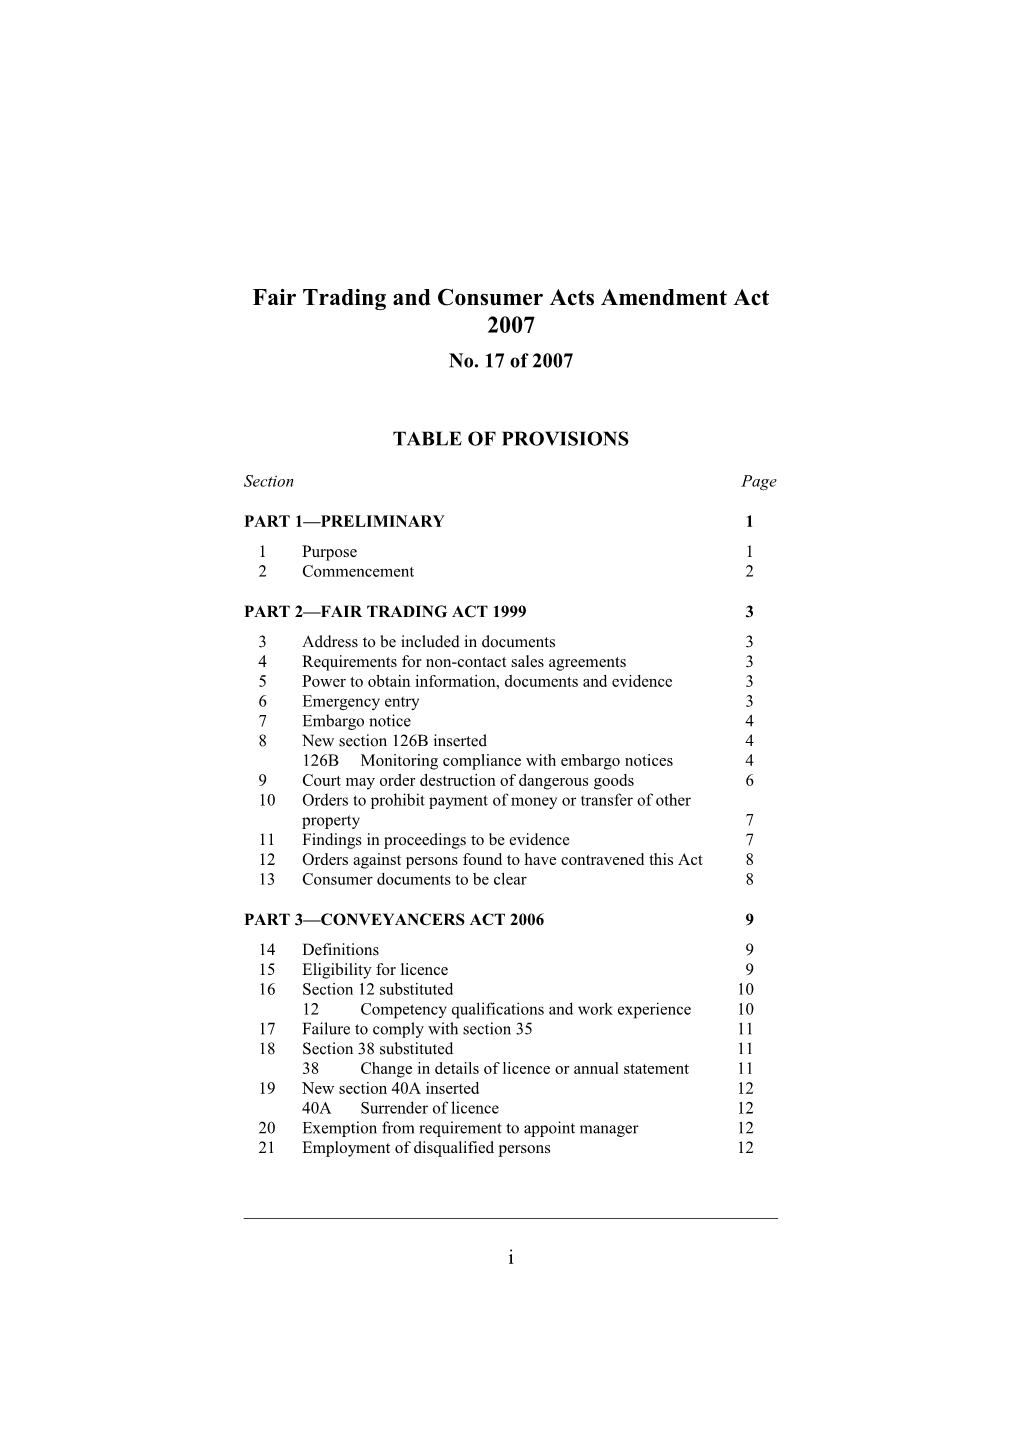 Fair Trading and Consumer Acts Amendment Act 2007